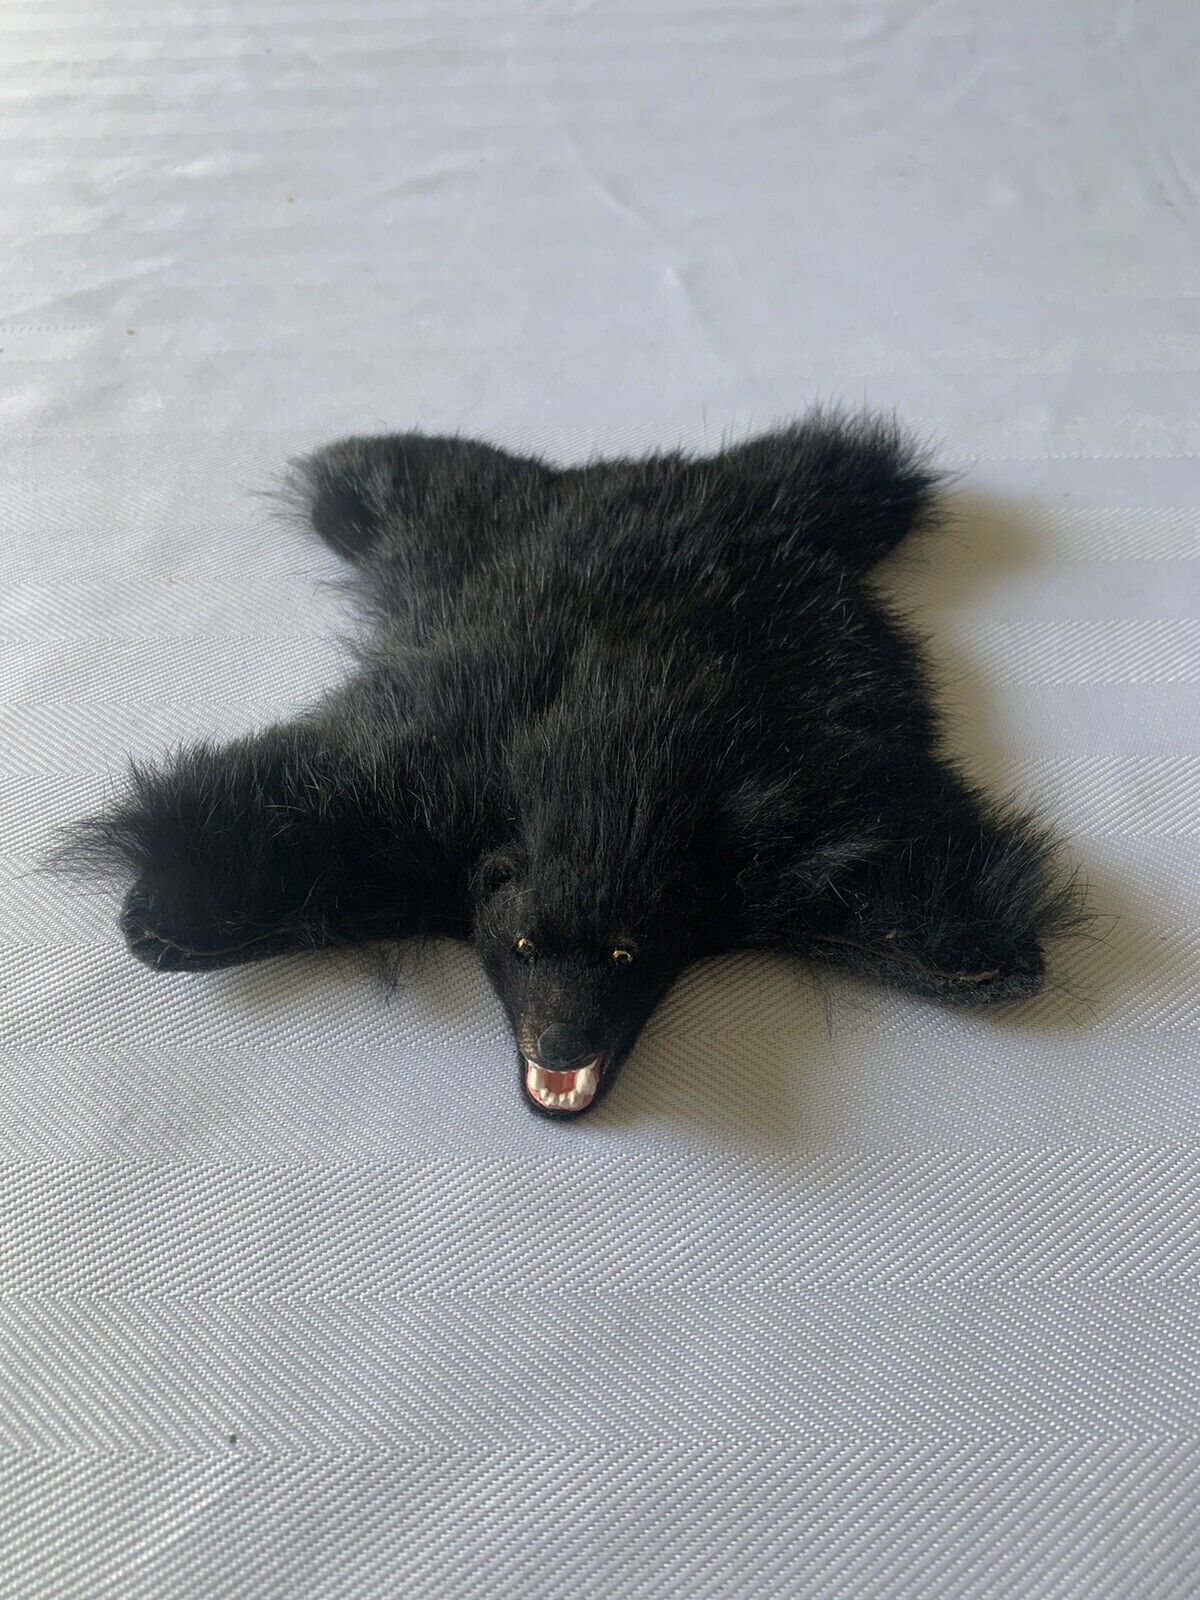 Miniature Bearskin Rug 1:12 Scale Dollhouse Realistic Artisan